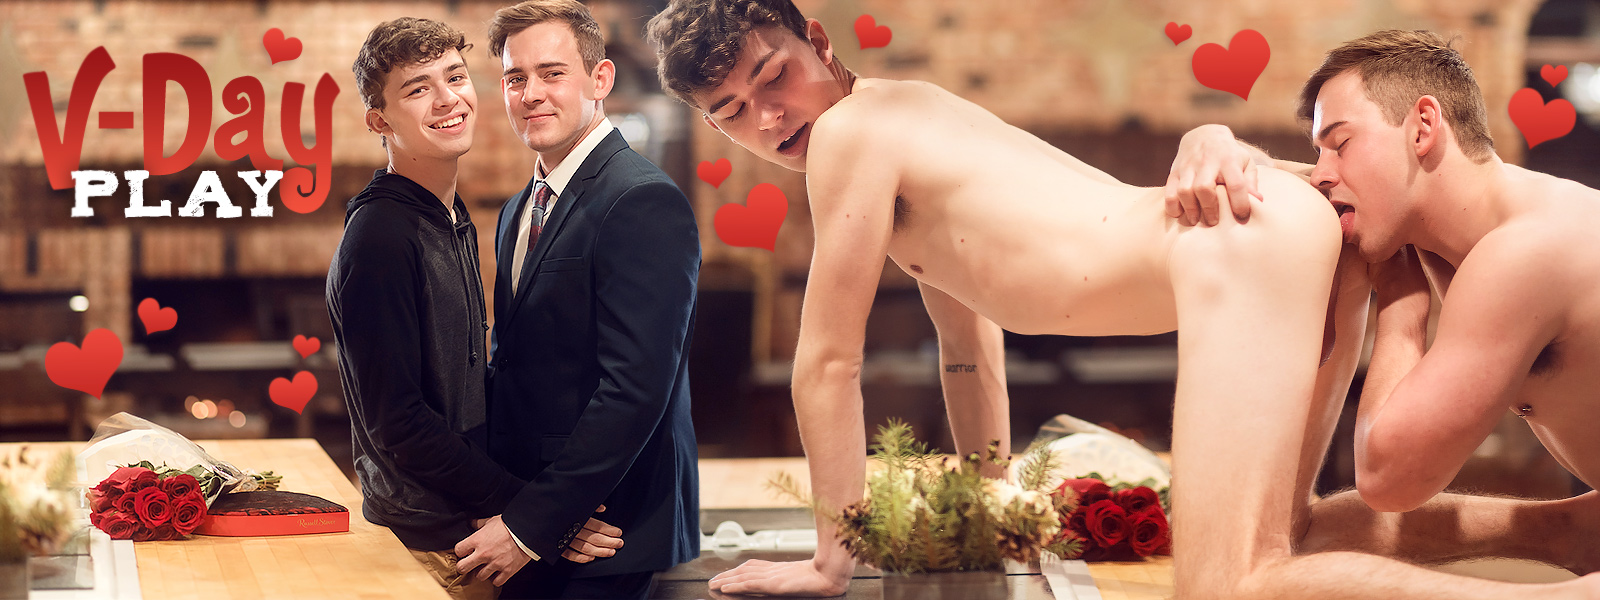 Skinny twinks Collin Adams & Josh Brady doing sex with full of desires on V-day